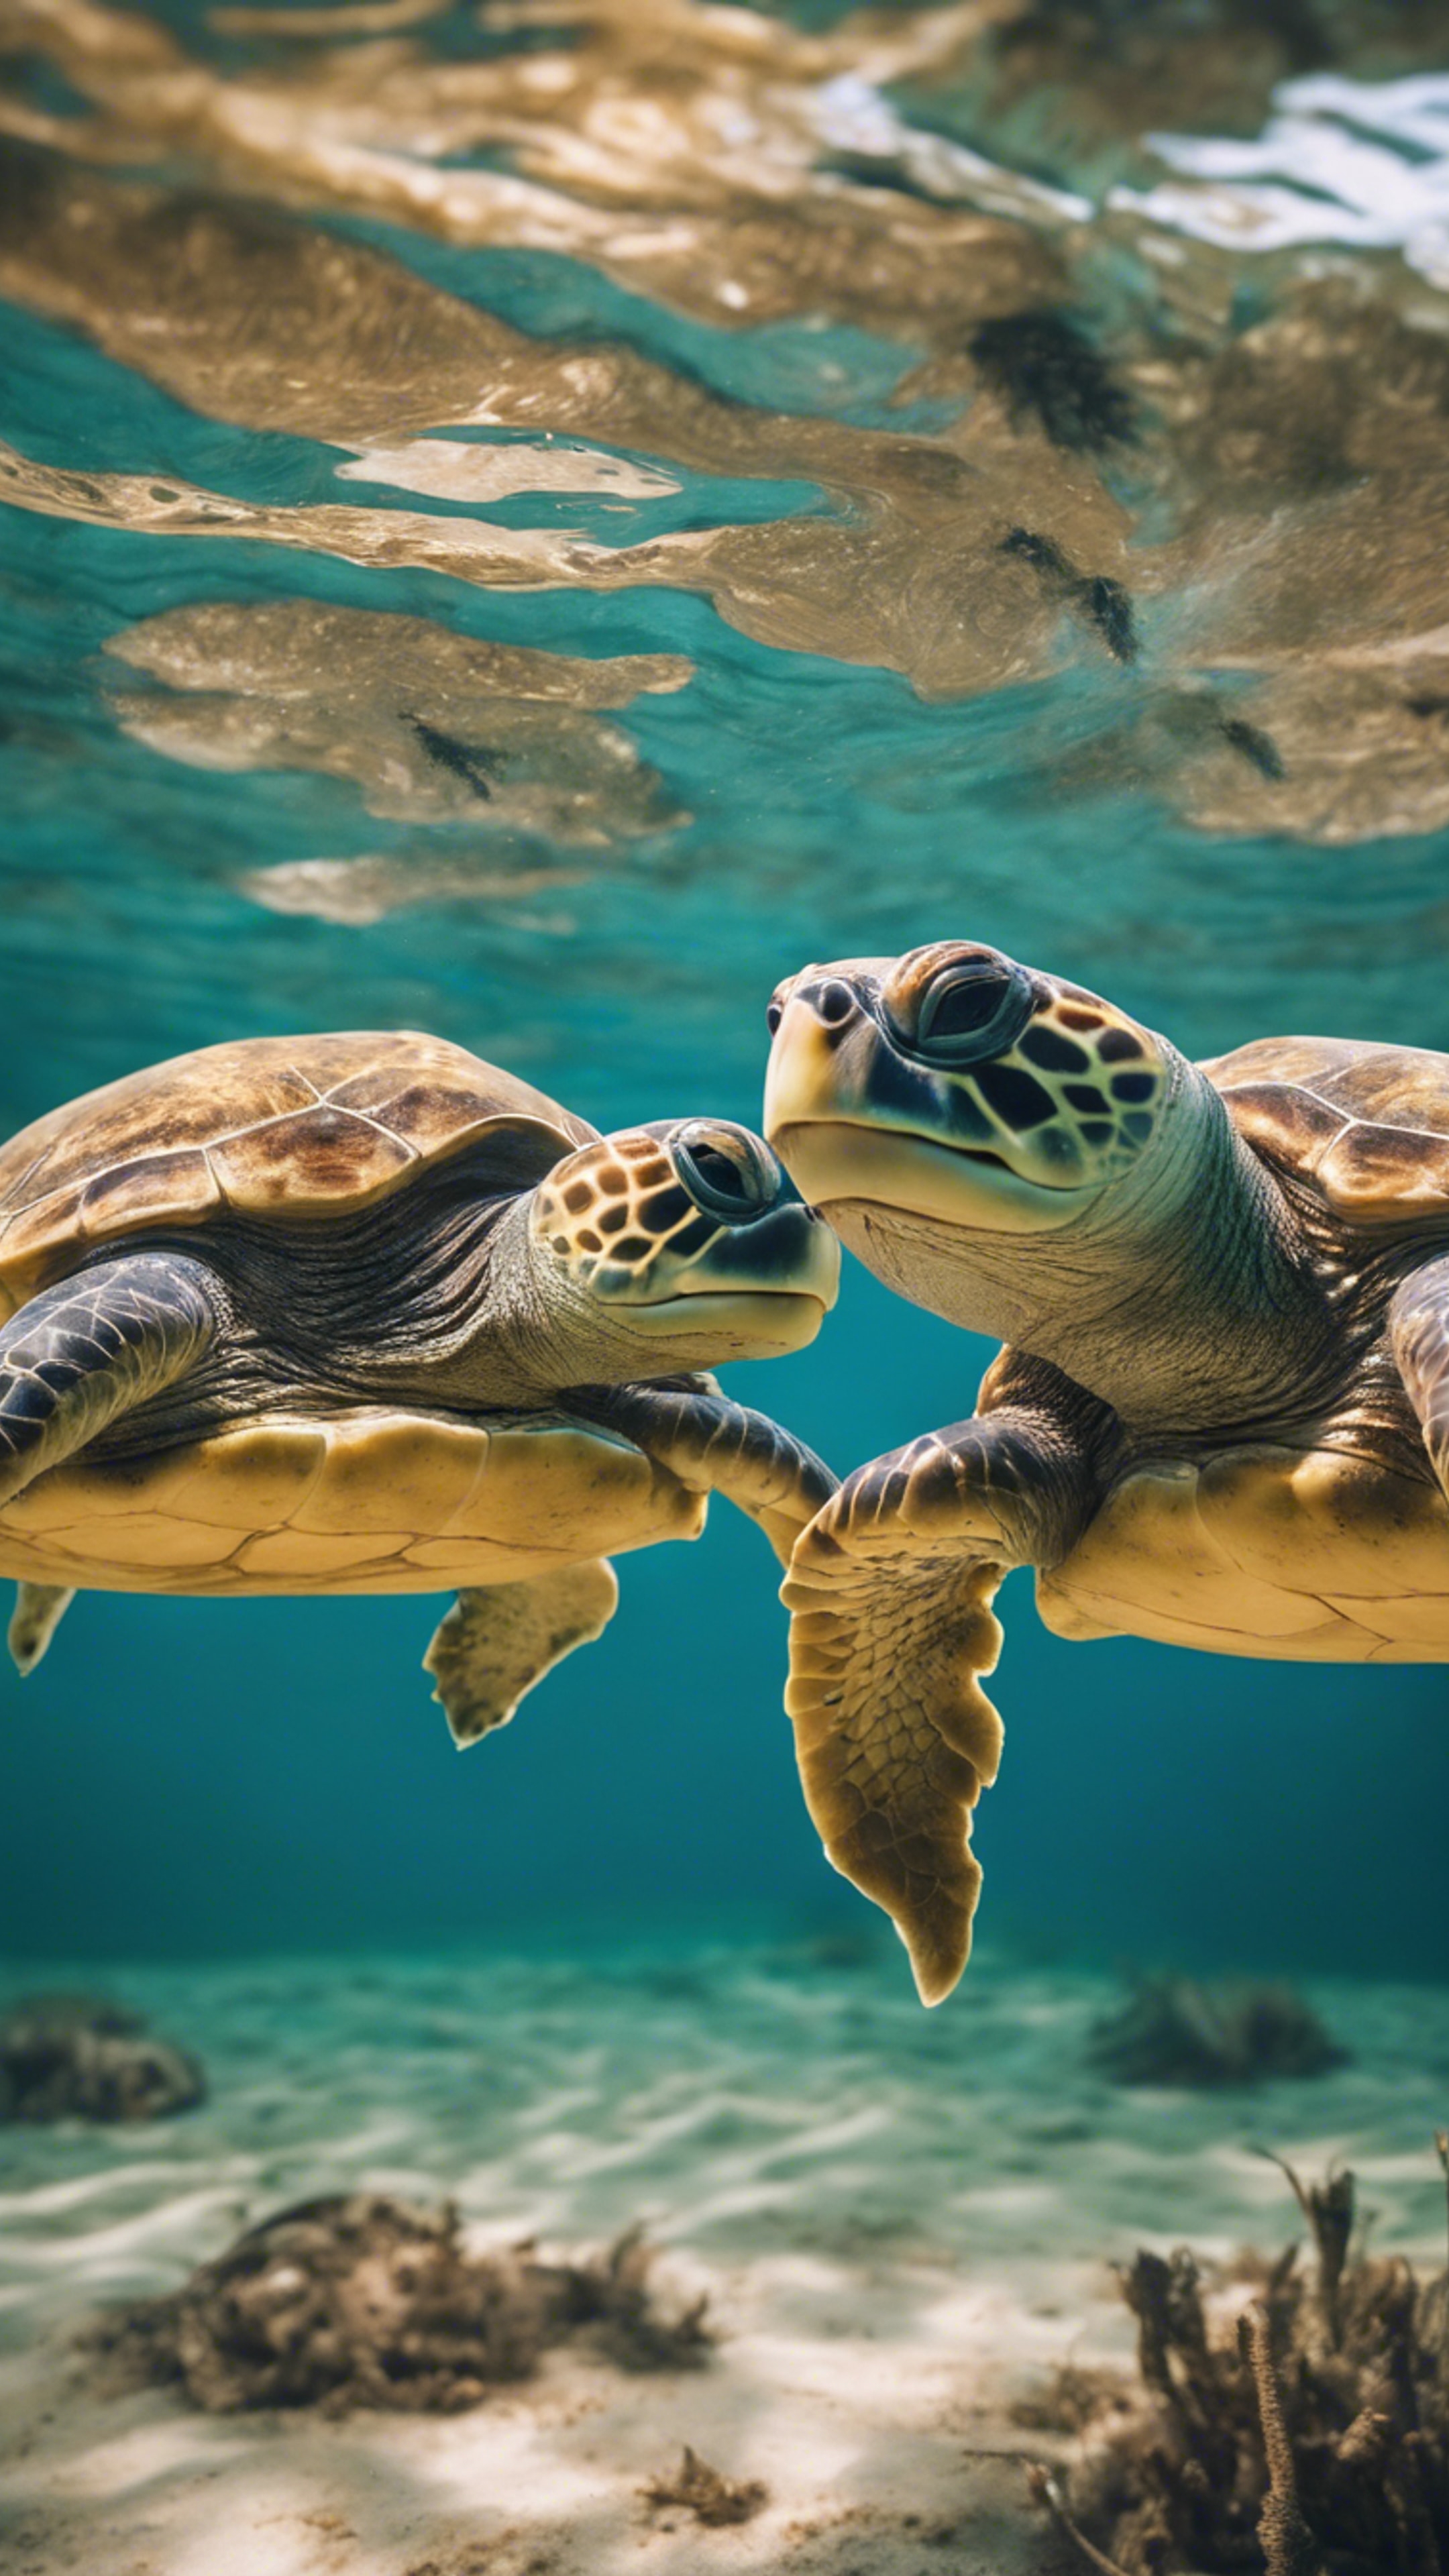 A pair of teenage loggerhead turtles leisurely swimming in warm, tropical waters. Tapeta[37e75d6fad0949b8b9fd]